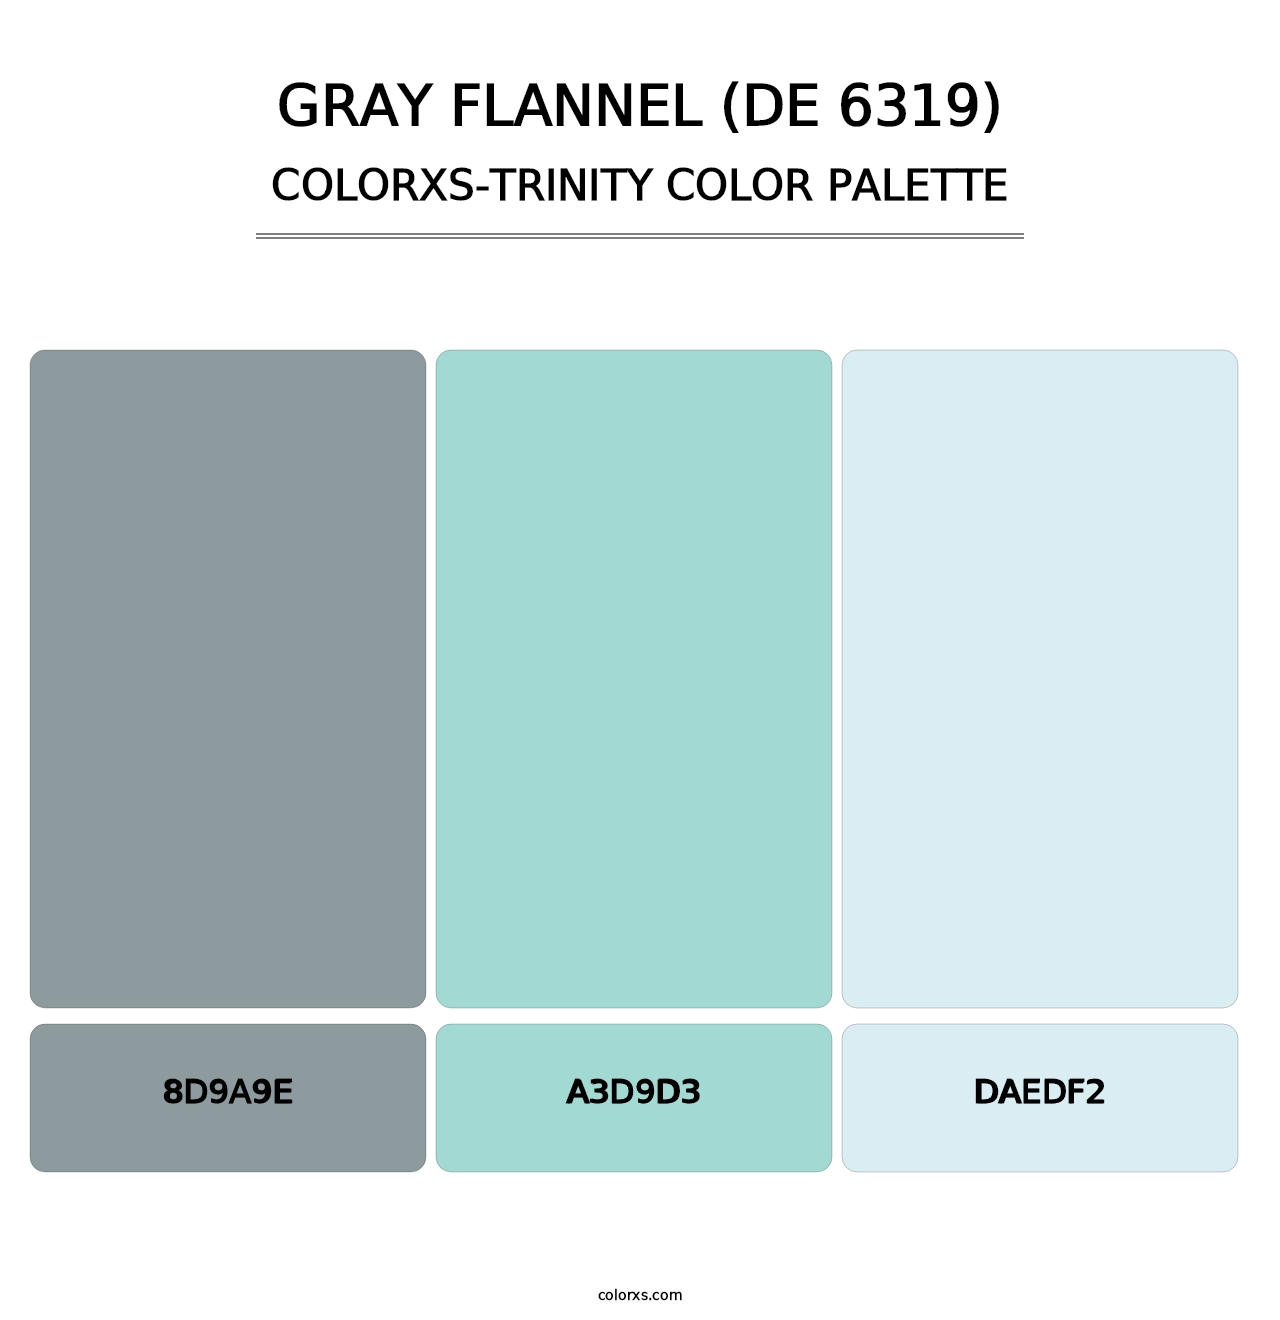 Gray Flannel (DE 6319) - Colorxs Trinity Palette